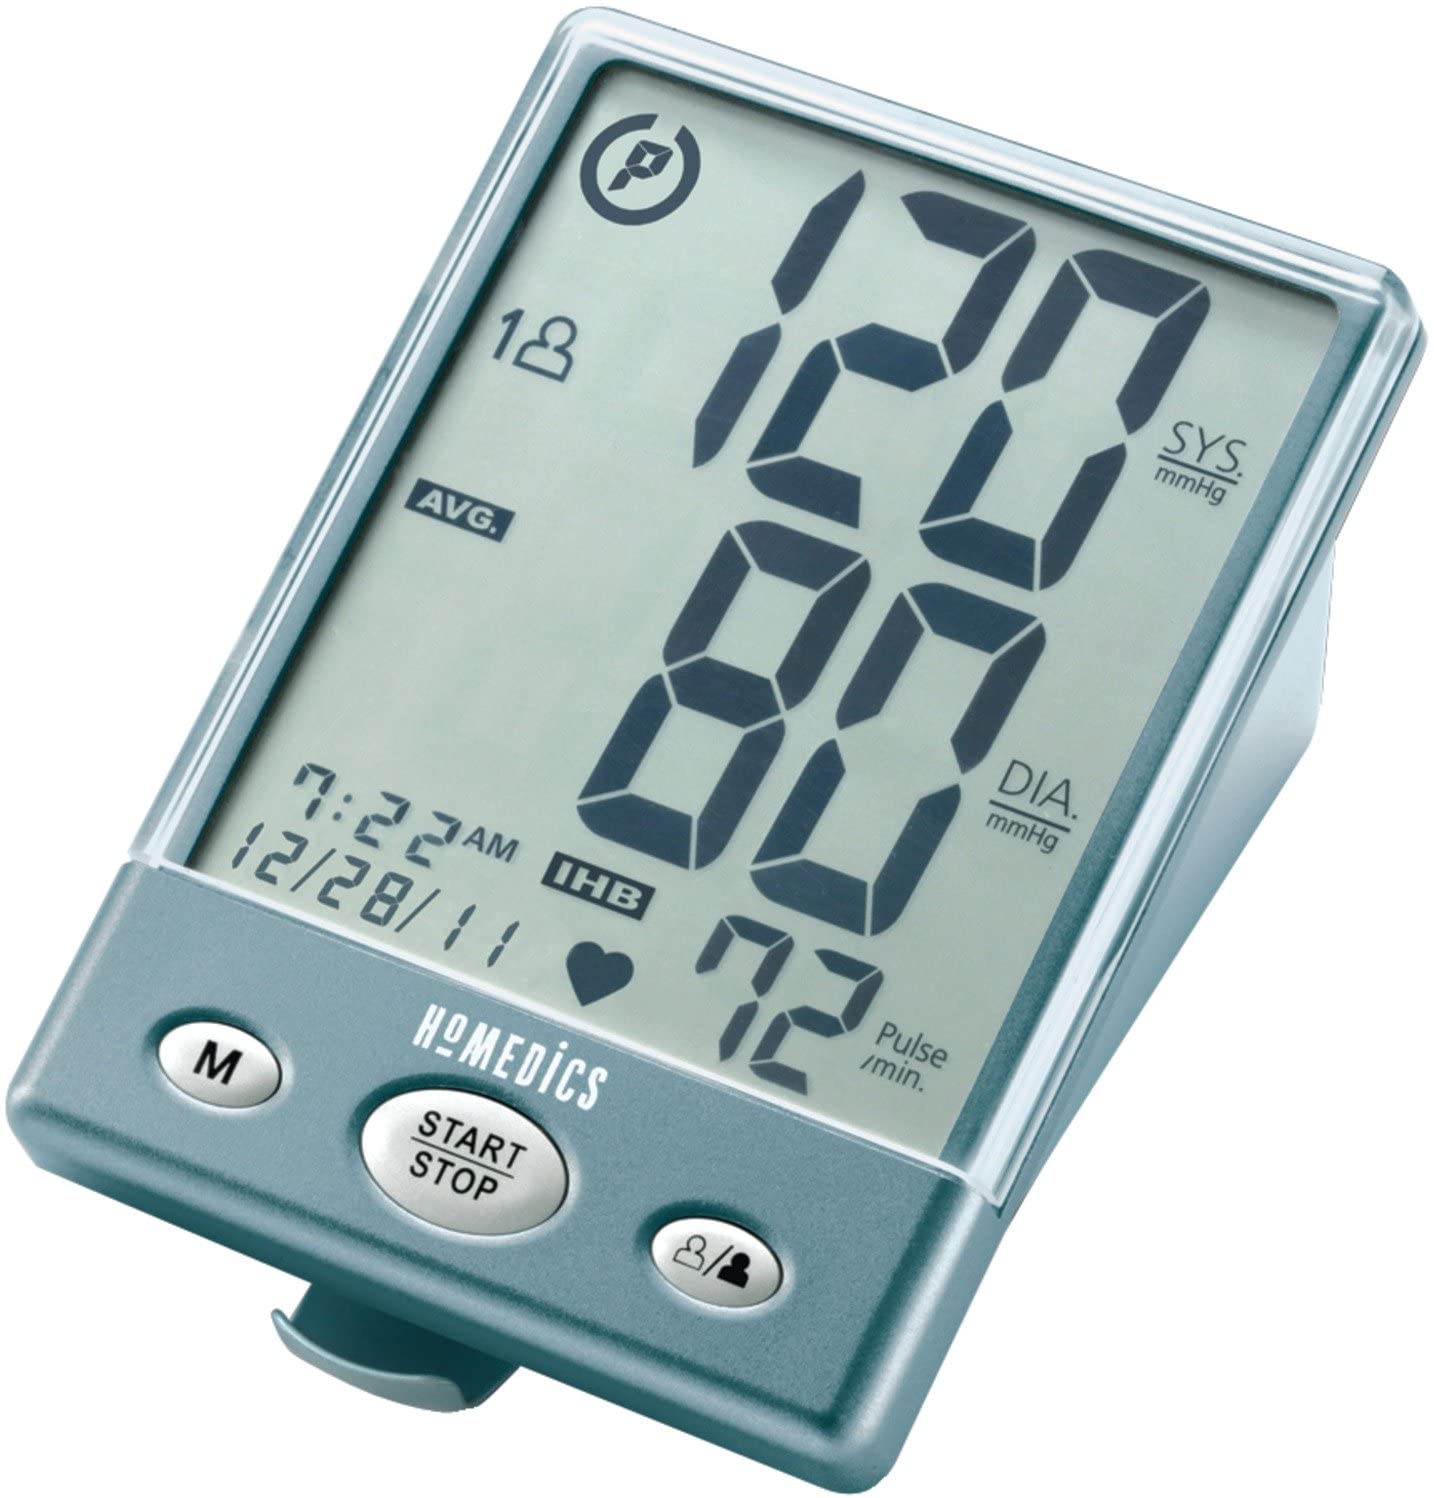 Homedics BPA-201 Automatic Blood Pressure Monitor User Manual